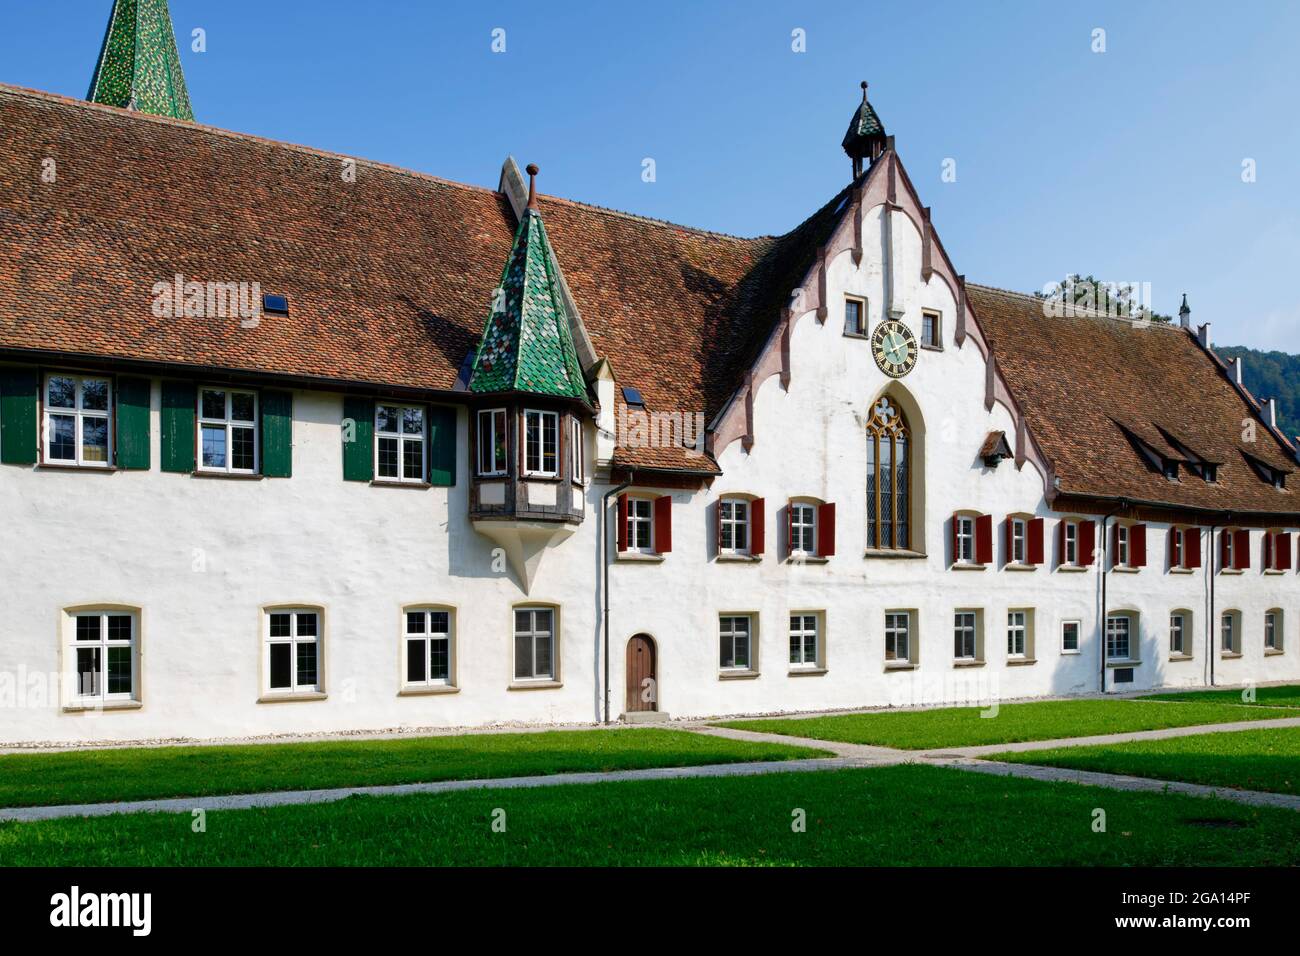 Abbaye de Blaubeuren, district d'Alb-Donau, Bade-Wurtemberg, Allemagne Banque D'Images